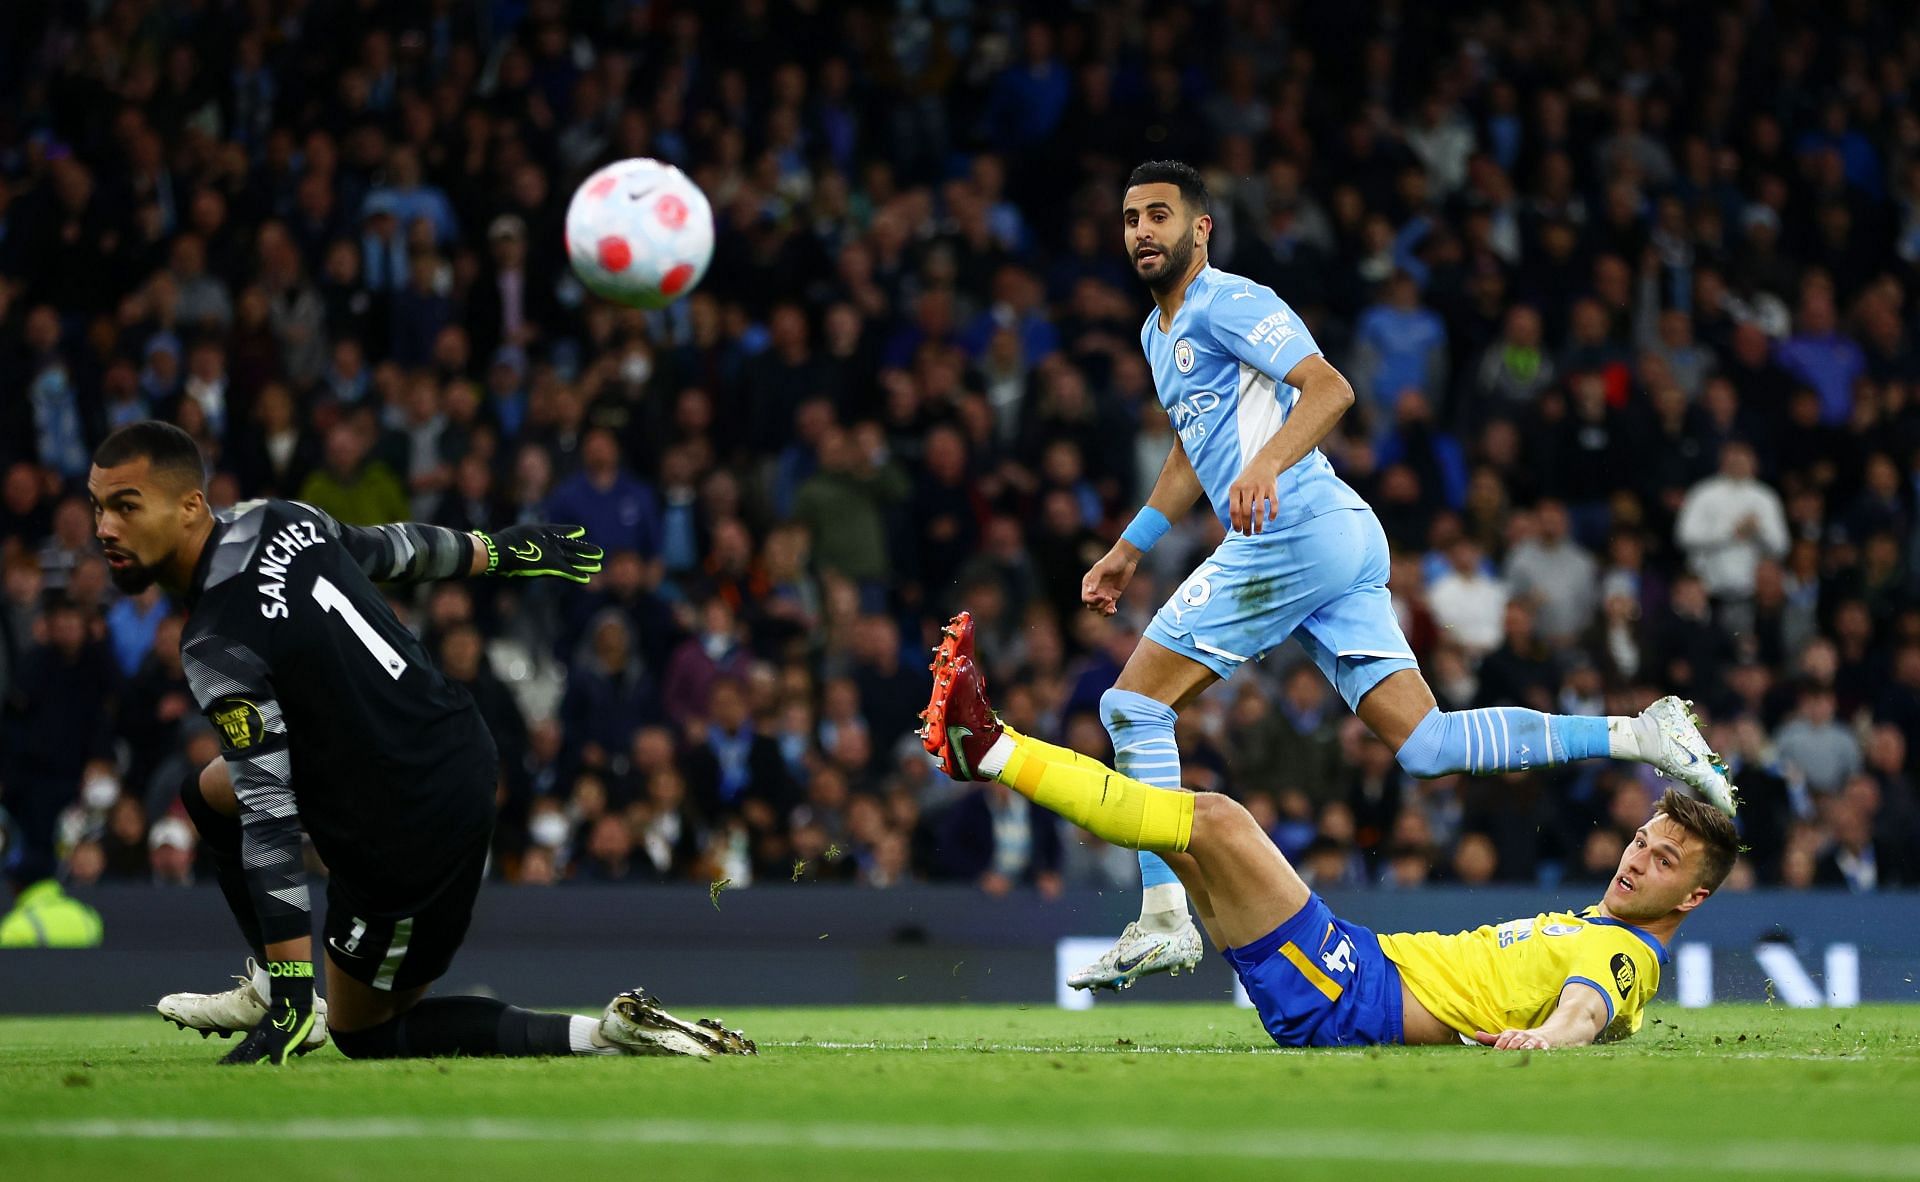 Riyad Mahrez has enjoyed a fruitful season with Manchester City so far.